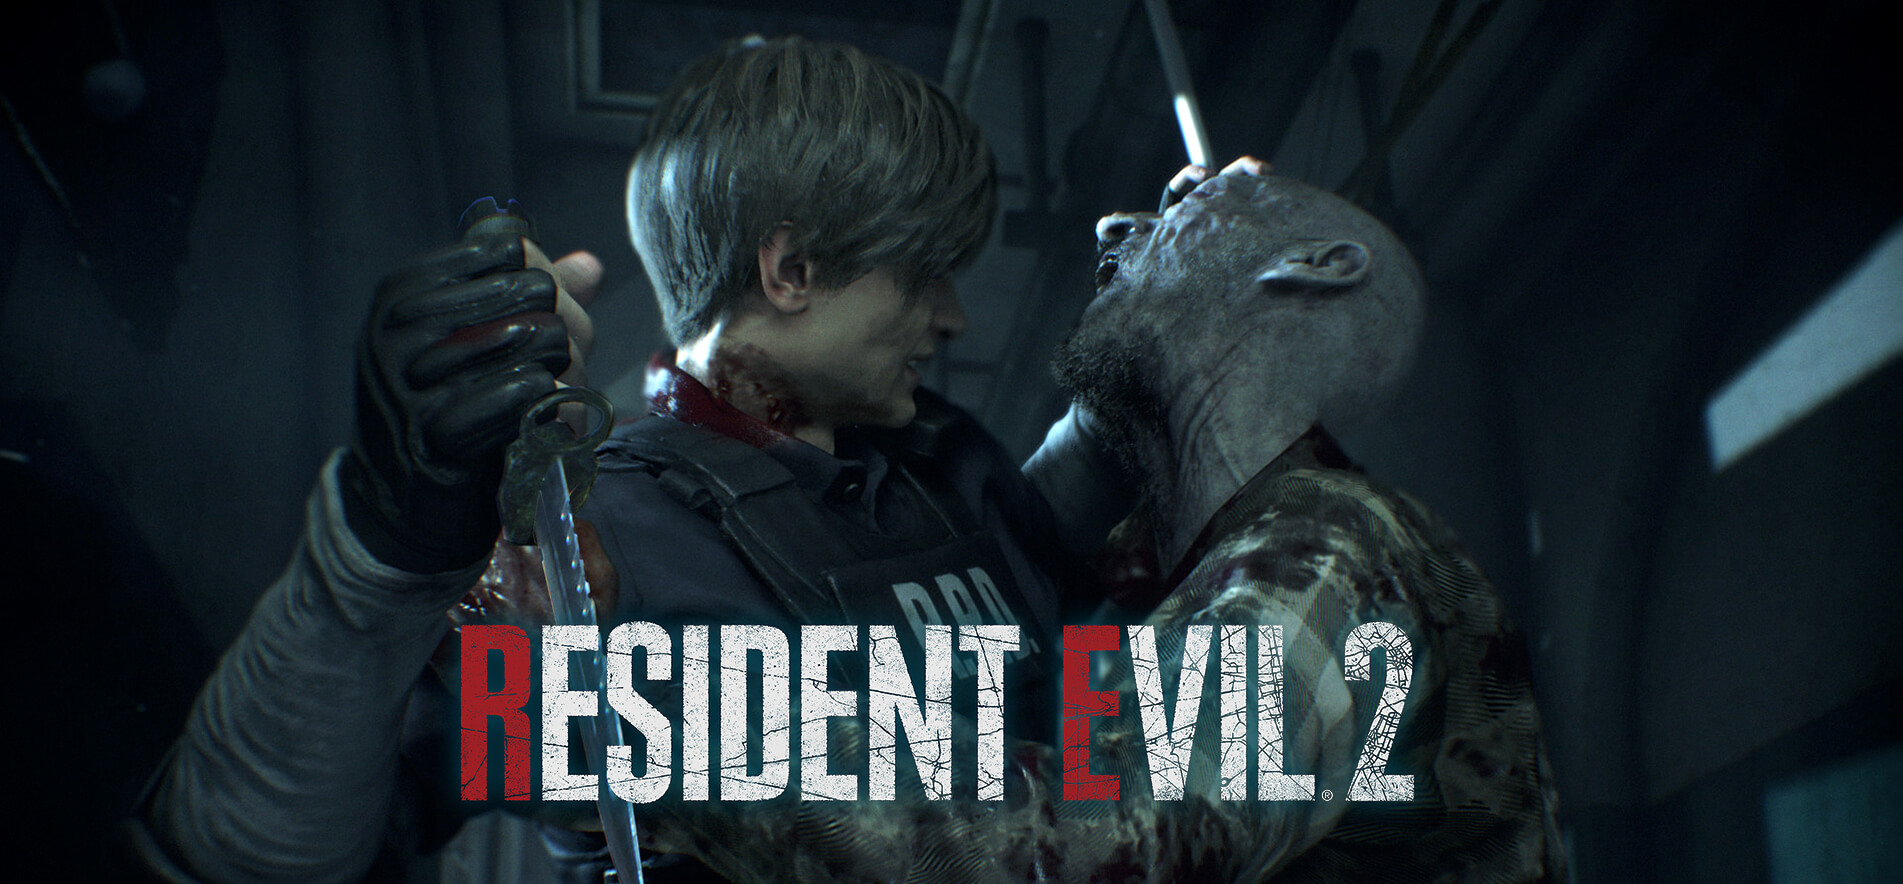 Сегодня выходит демоверсия Resident Evil 2 (фото)